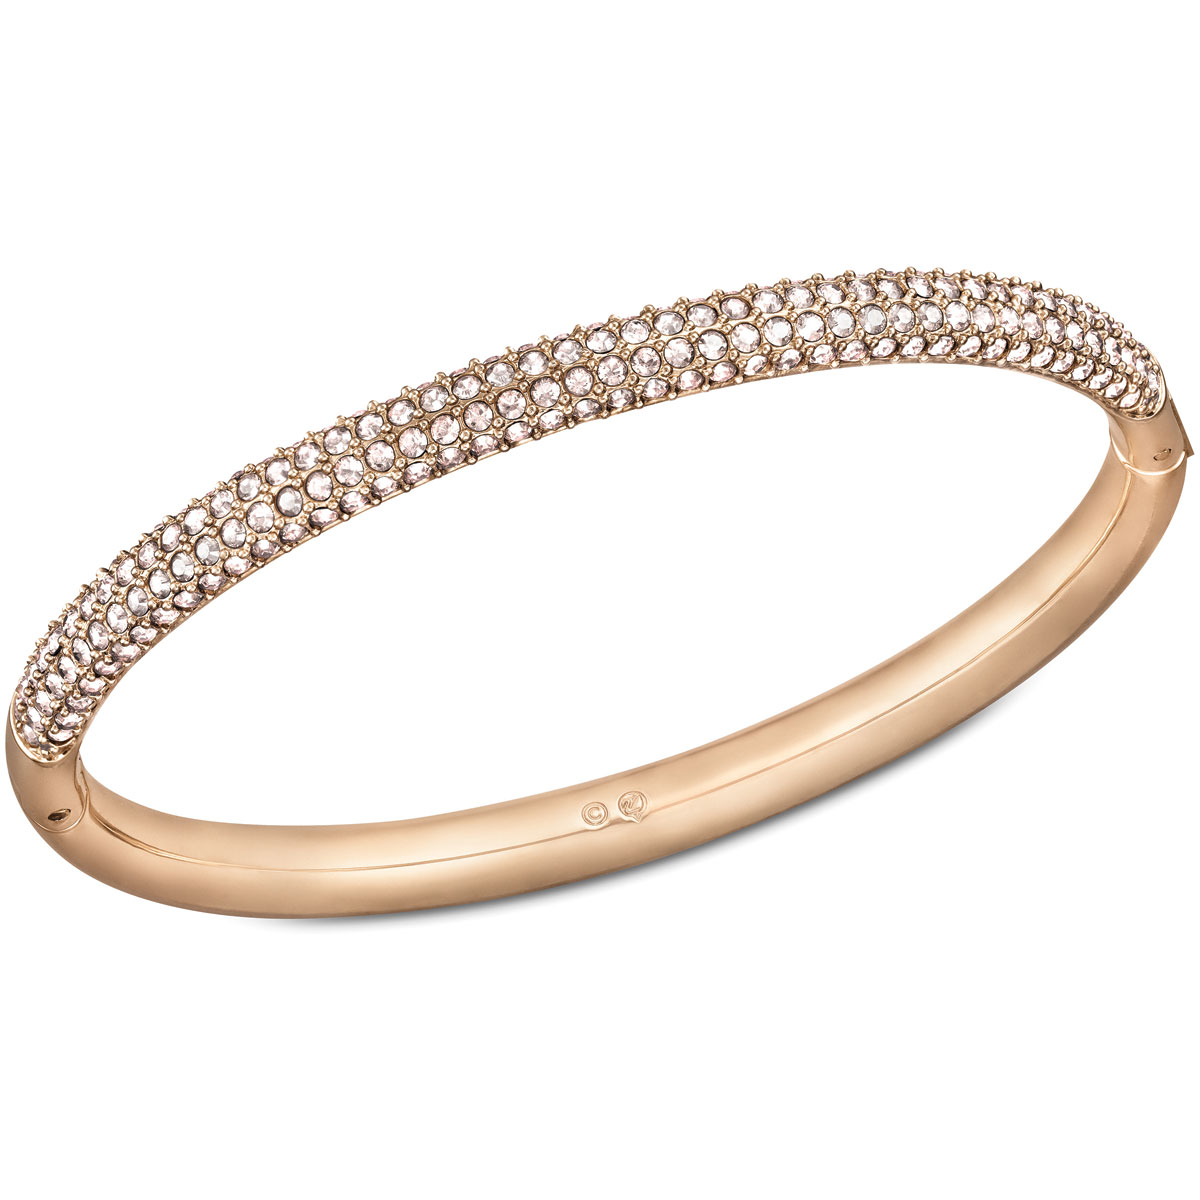 Swarovski Crystal and Rose Gold Stone Bangle Bracelet